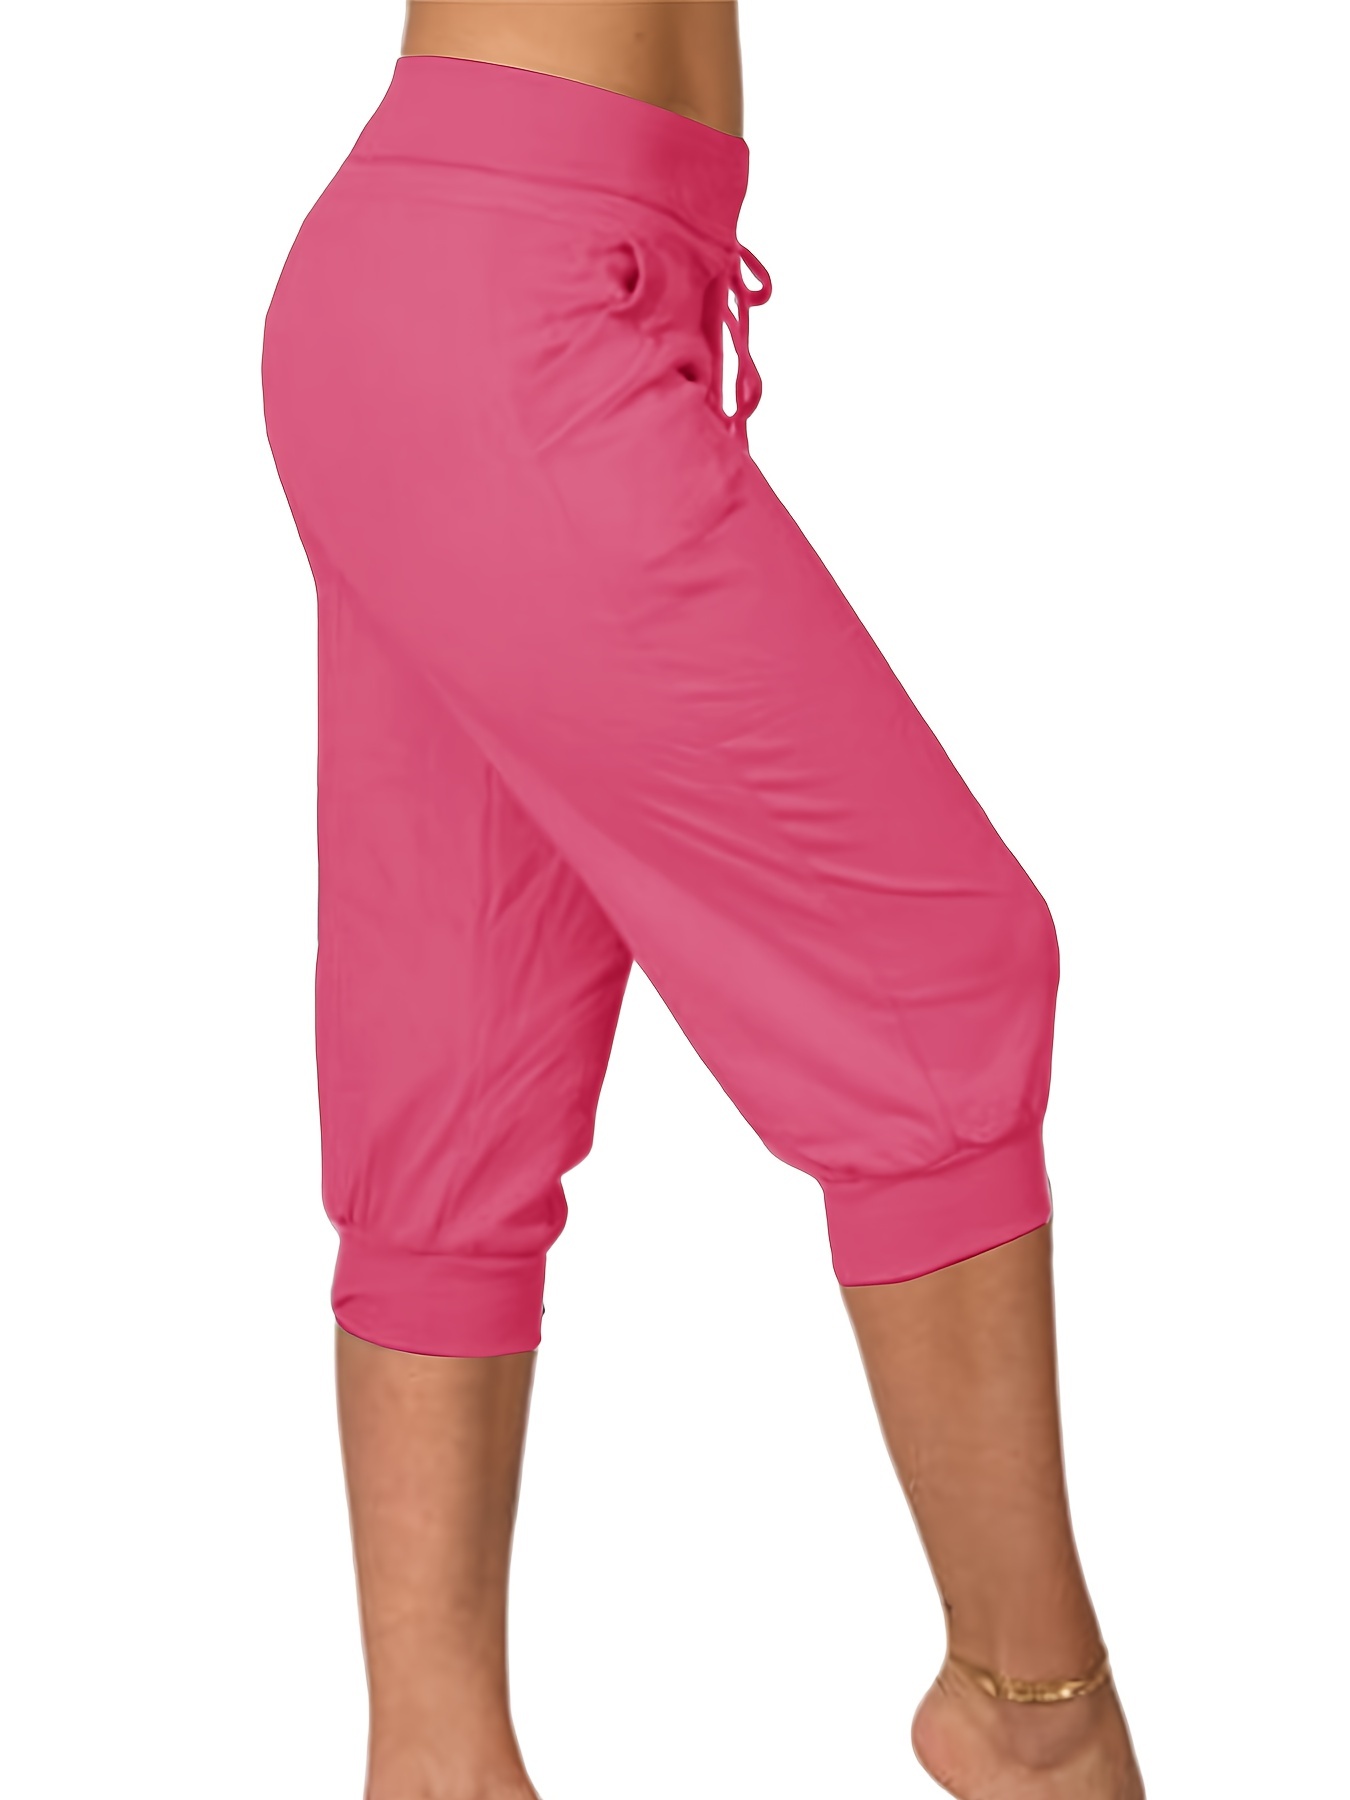 Patchwork Comfy Capri Pants for Women Casual Beach Elastic Women's